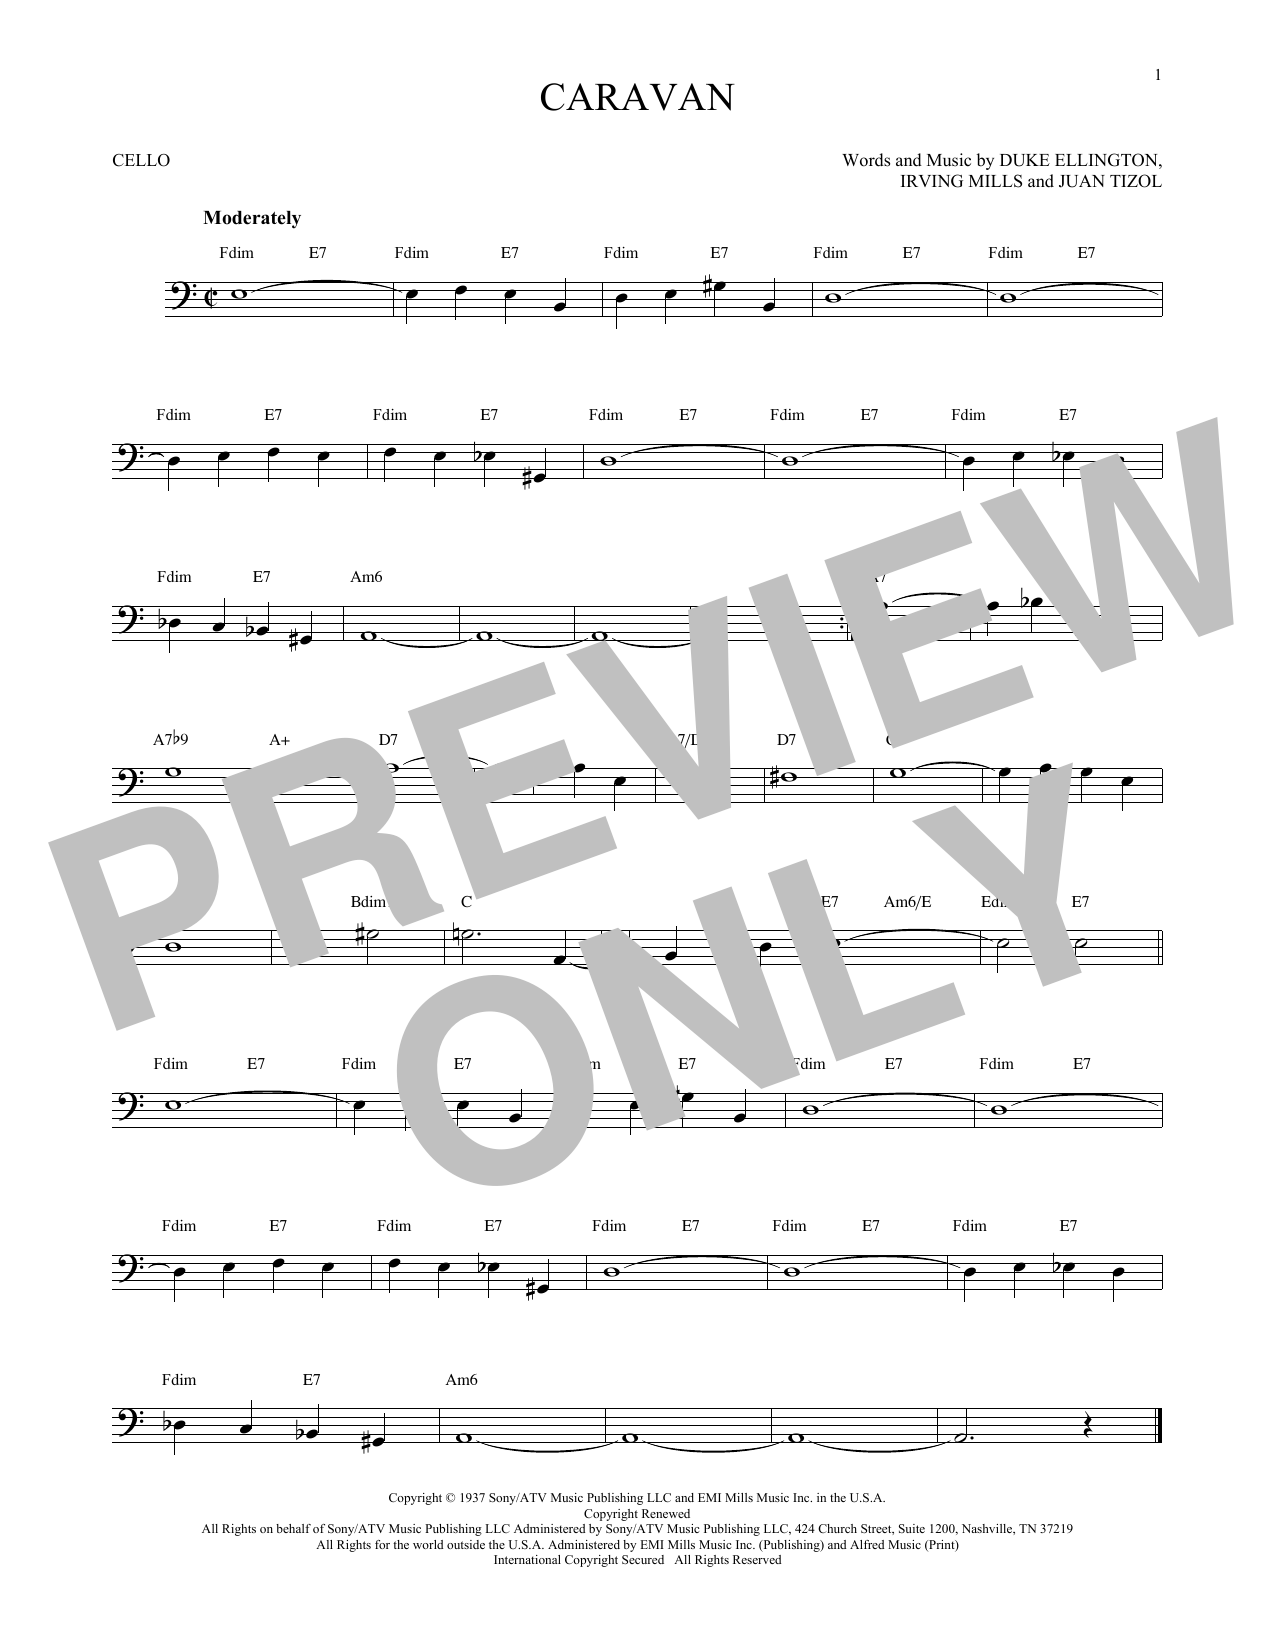 Juan Tizol & Duke Ellington Caravan Sheet Music Notes & Chords for French Horn - Download or Print PDF